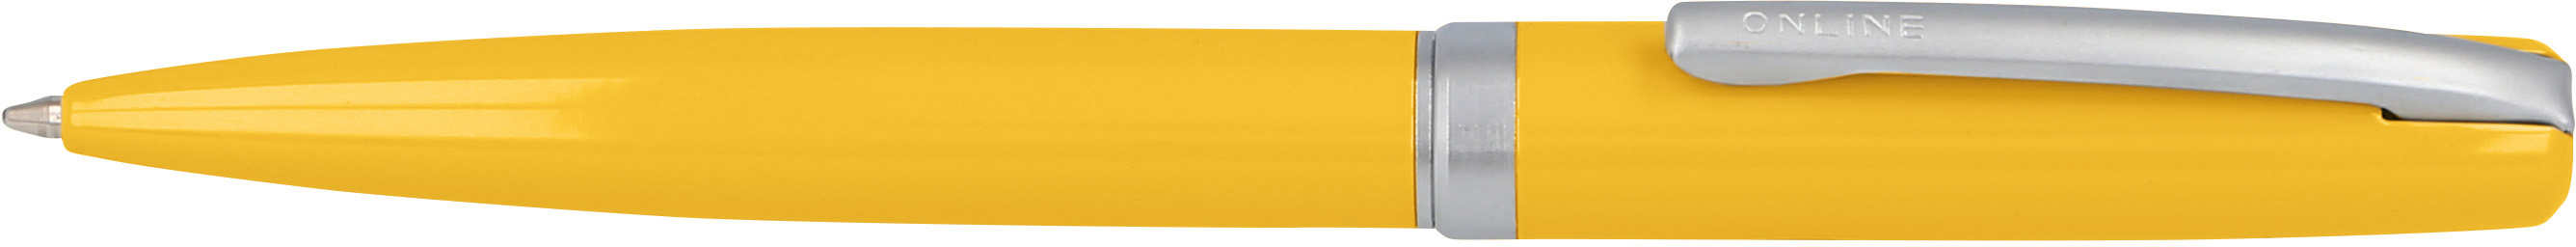 ONLINE Stylo à bille 34682/3D Eleganza Indian Summer Yellow